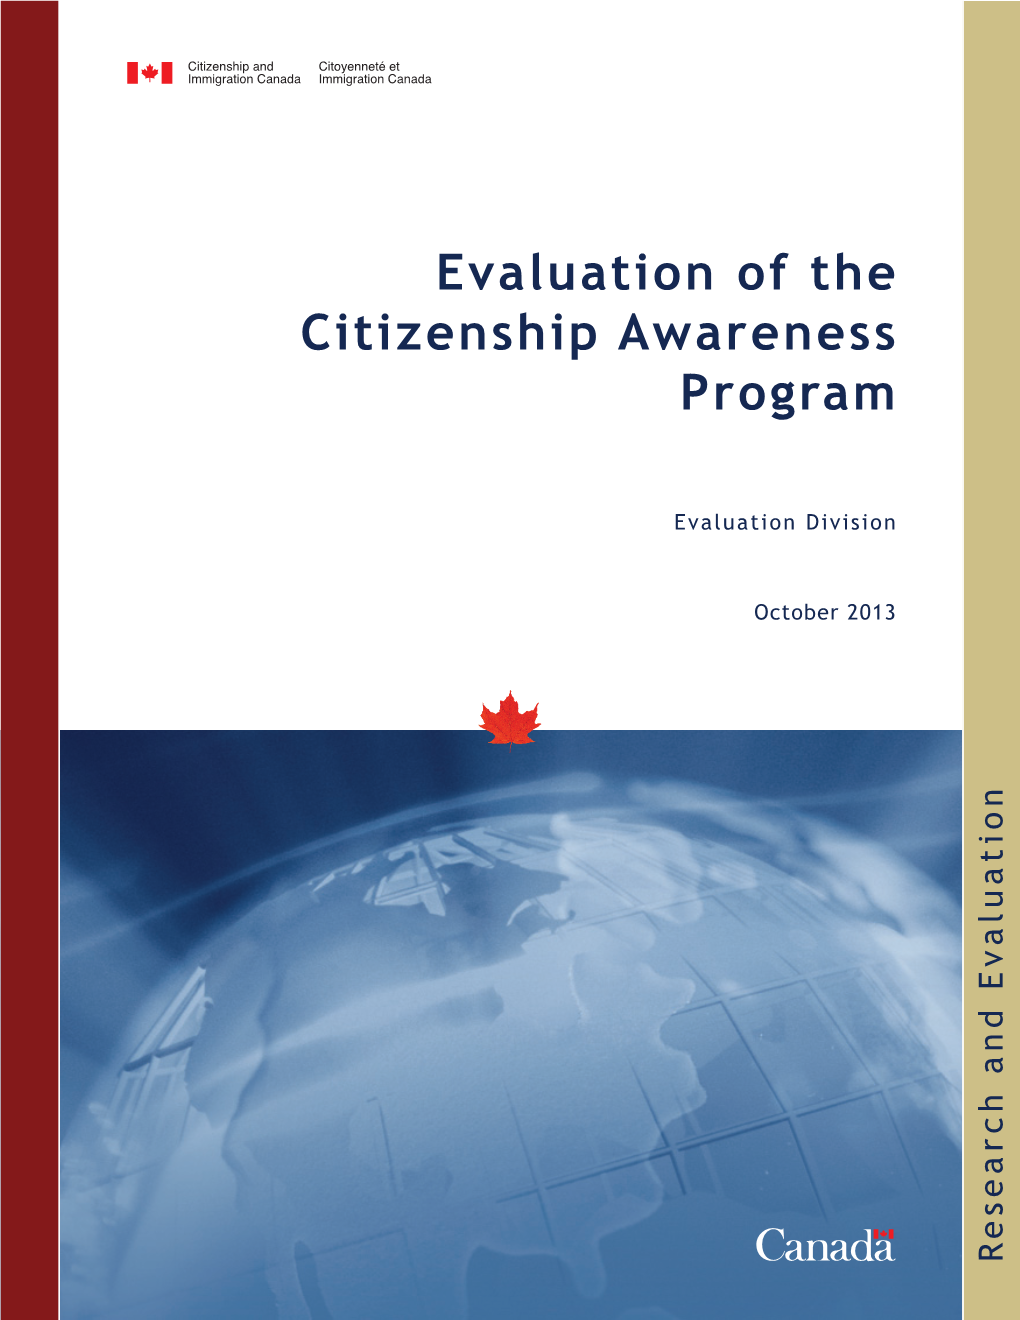 Evaluation of the Citizenship Awareness Program - Management Response Action Plan (MRAP)